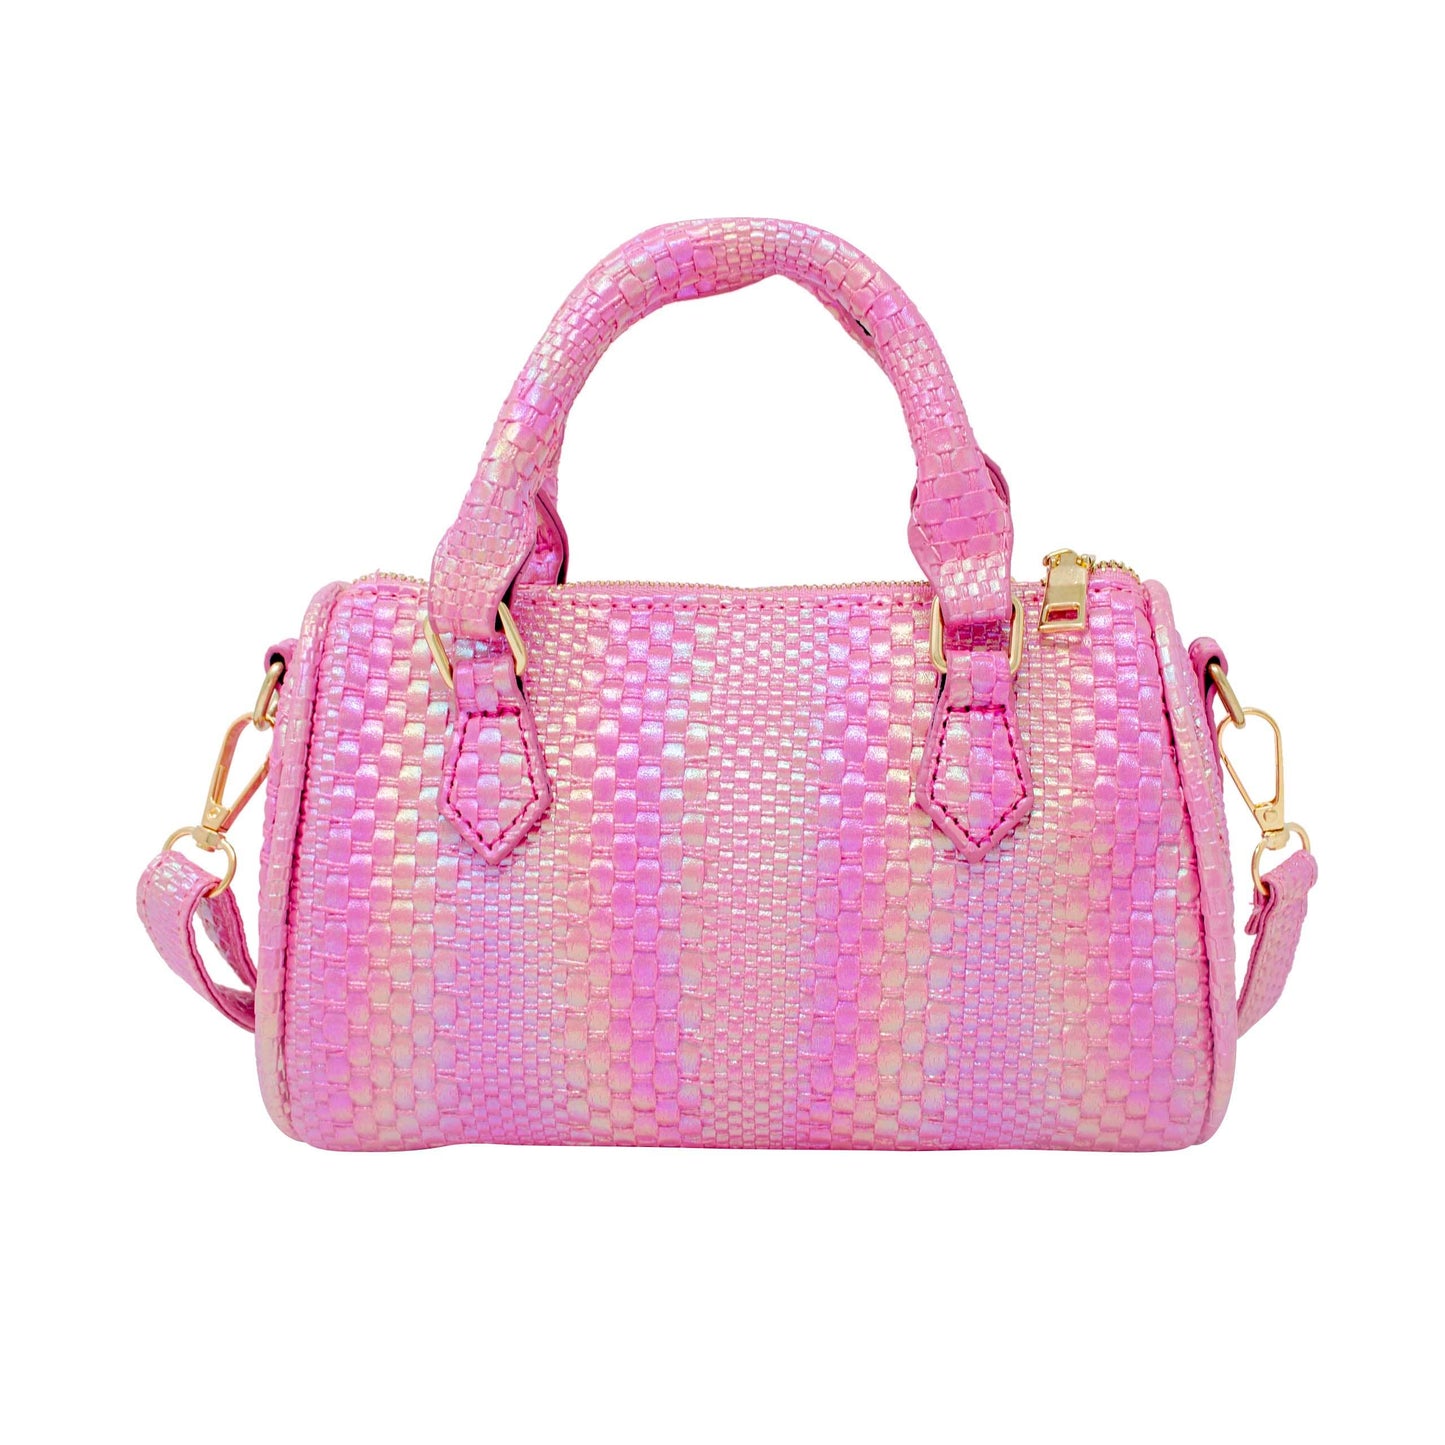 Rainbow Woven Duffle Handbag - Hot Pink